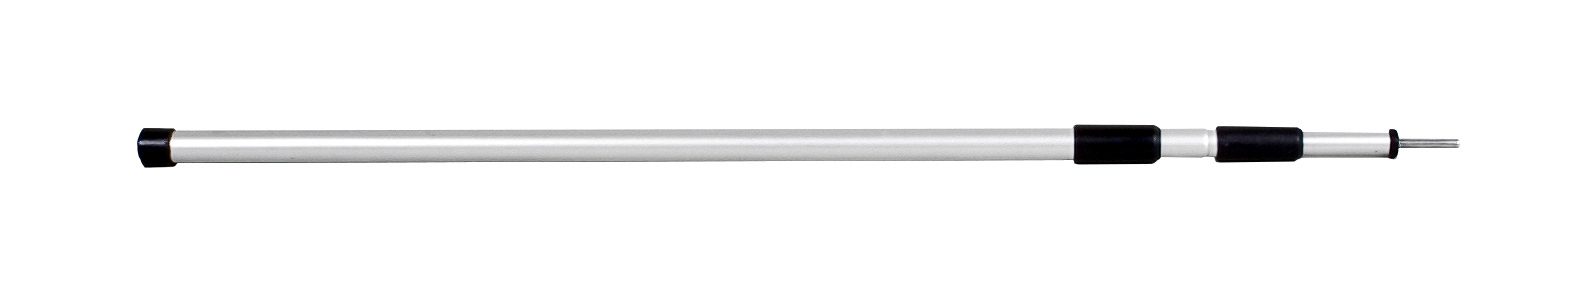 Basicnature 3-section Alu Pole, Extendable Big', 100-240 cm